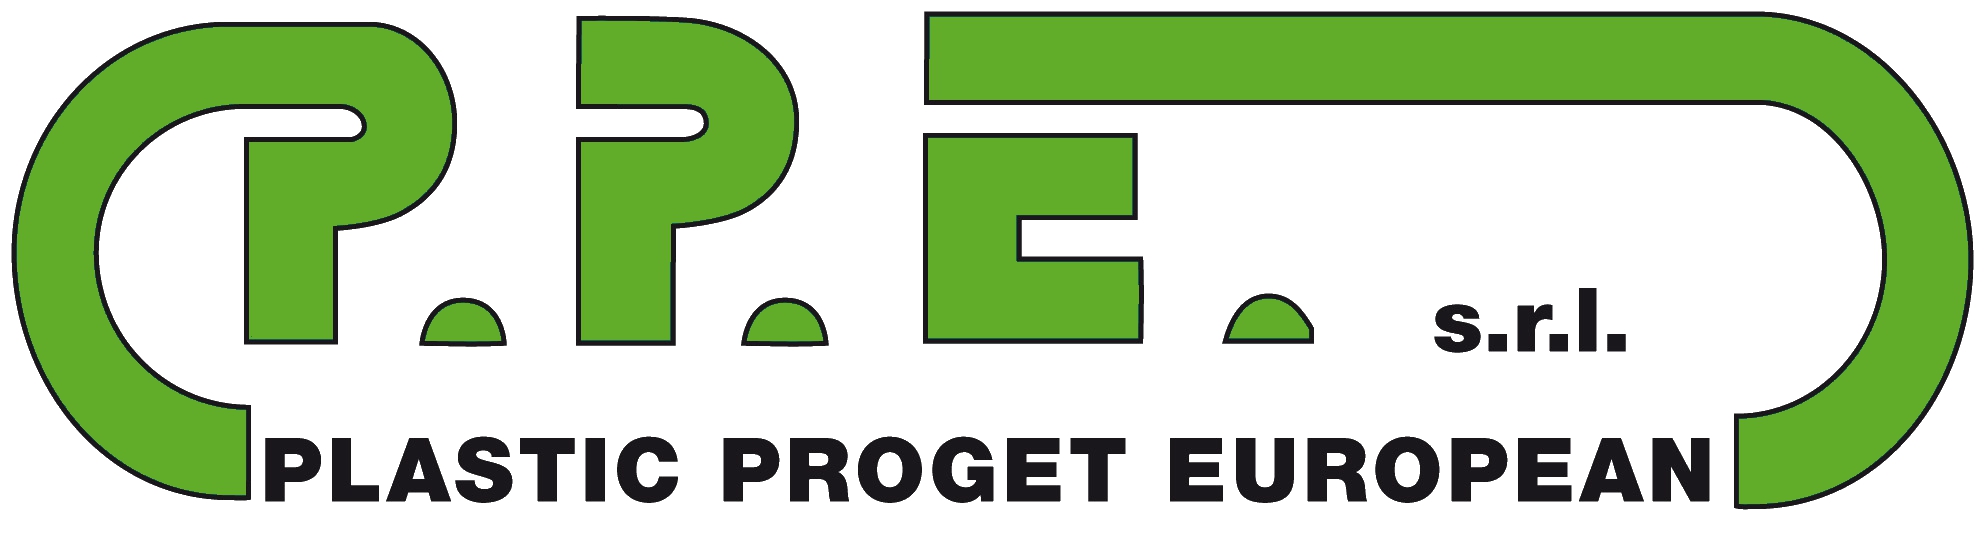 plastic-proget-european-srl-p-p-e